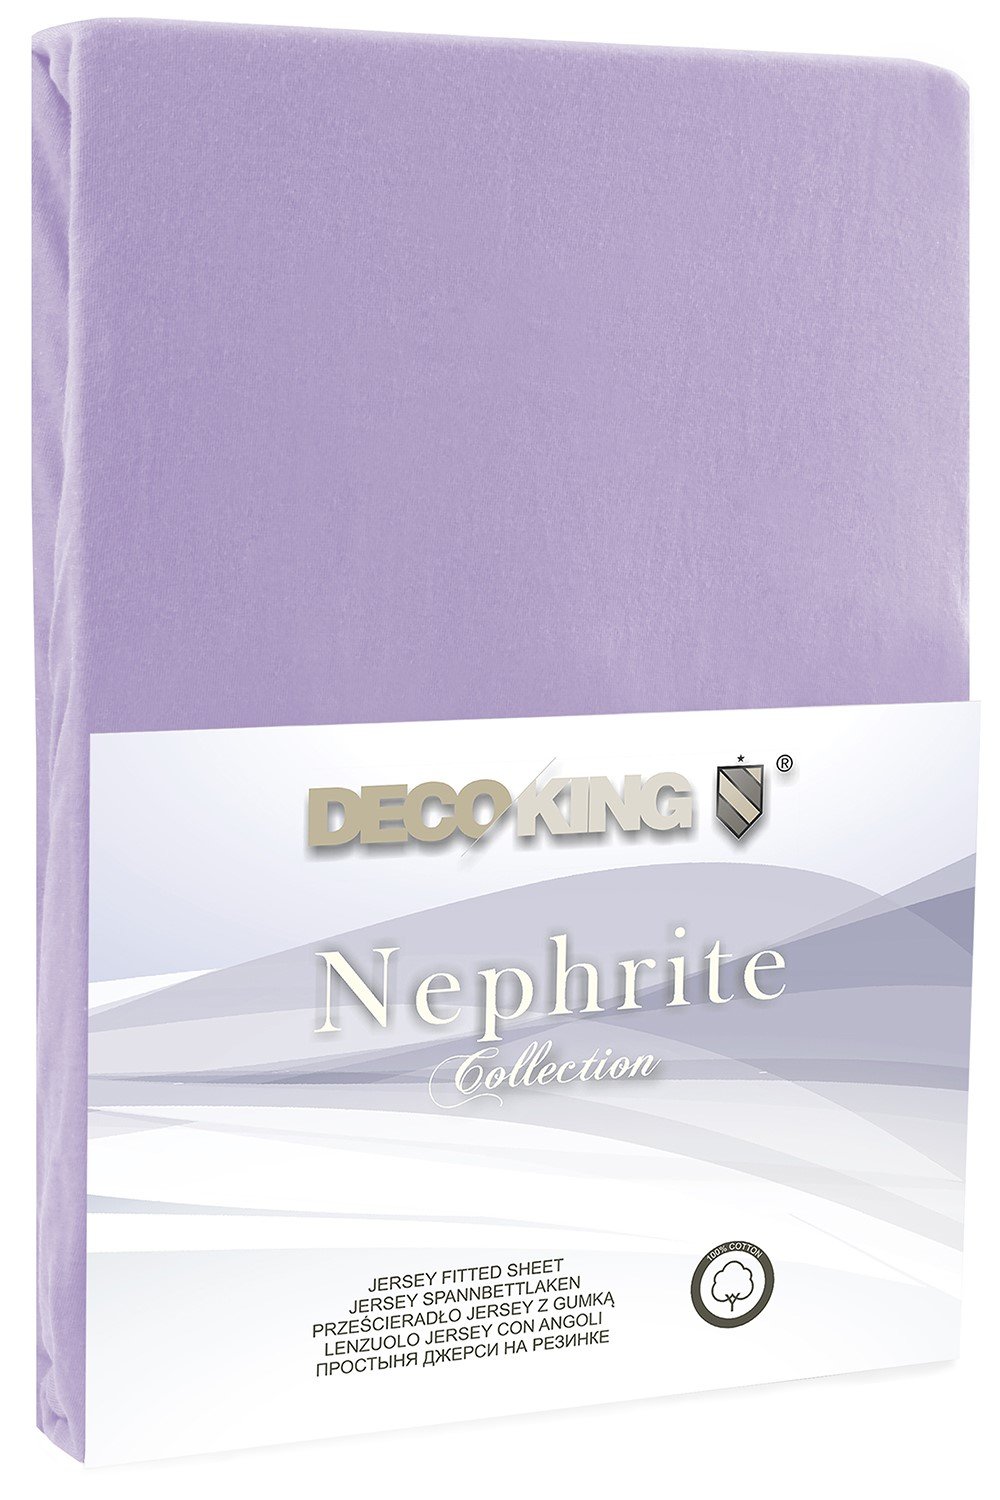 Jersey paklodė su guma Decoking NEPHRITE Light violet, 200x200 cm